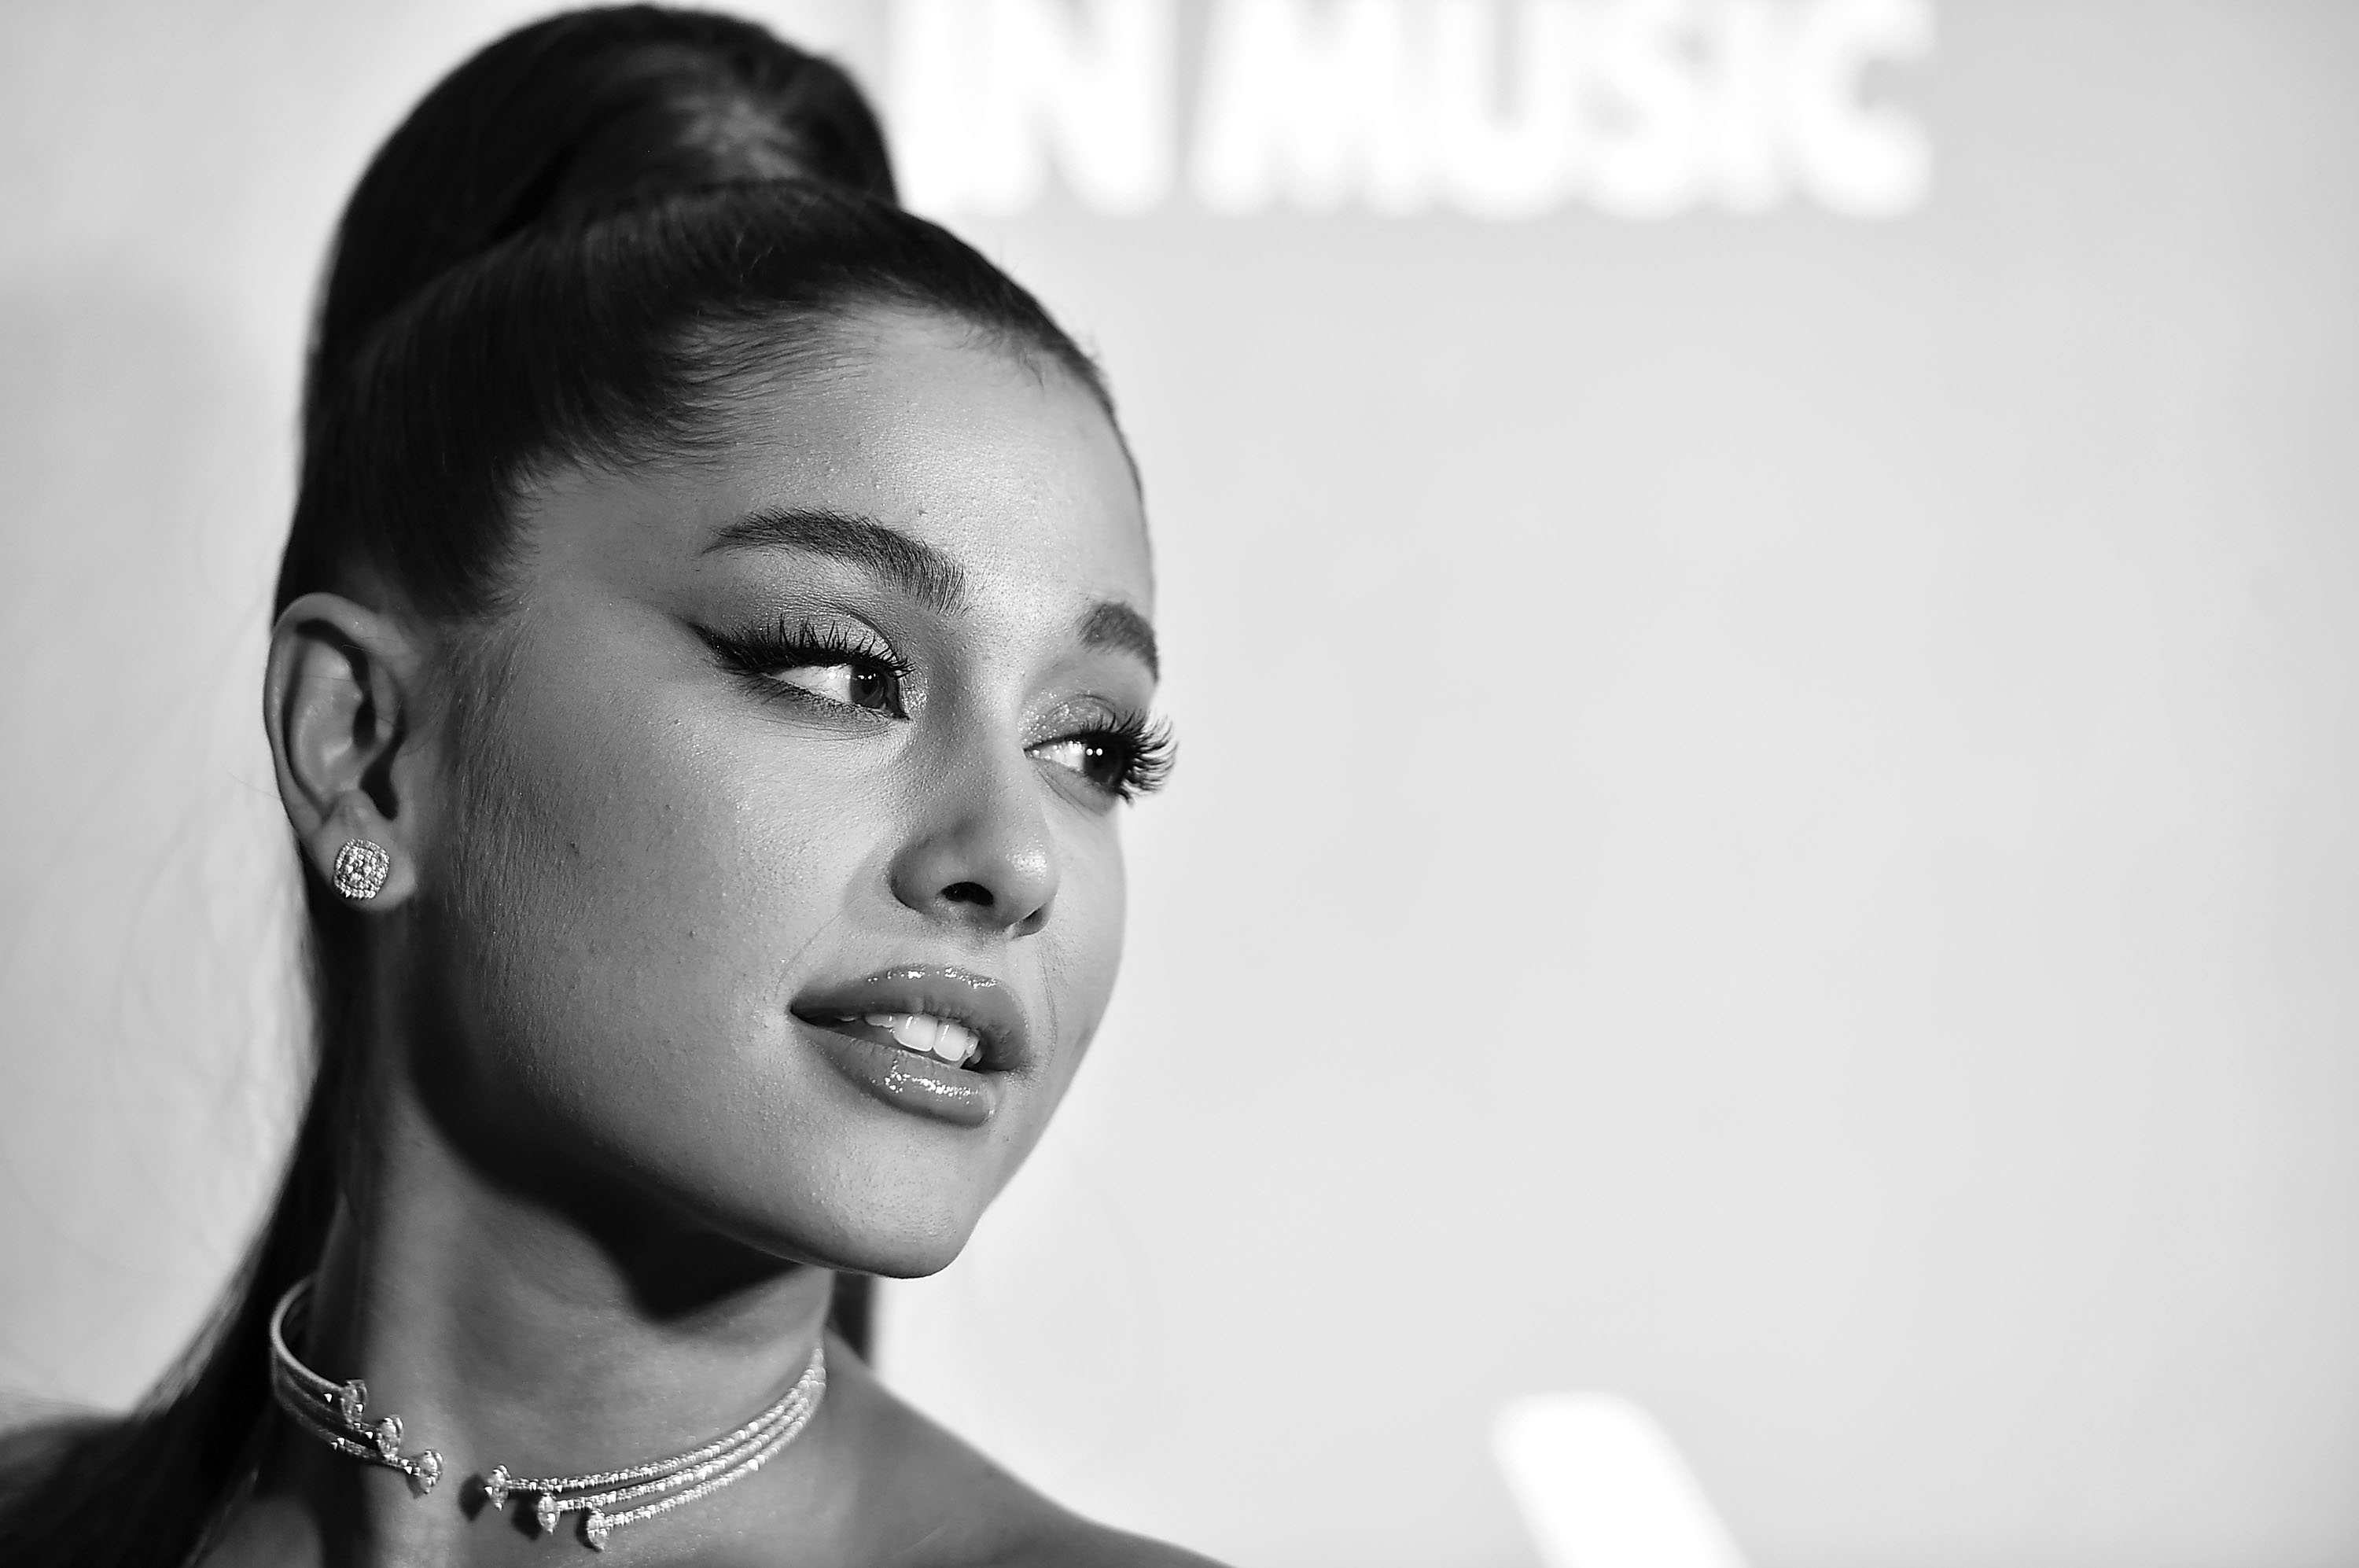 Ariana Grande Recalls Mac Miller's 'Beautiful' Passion for Music